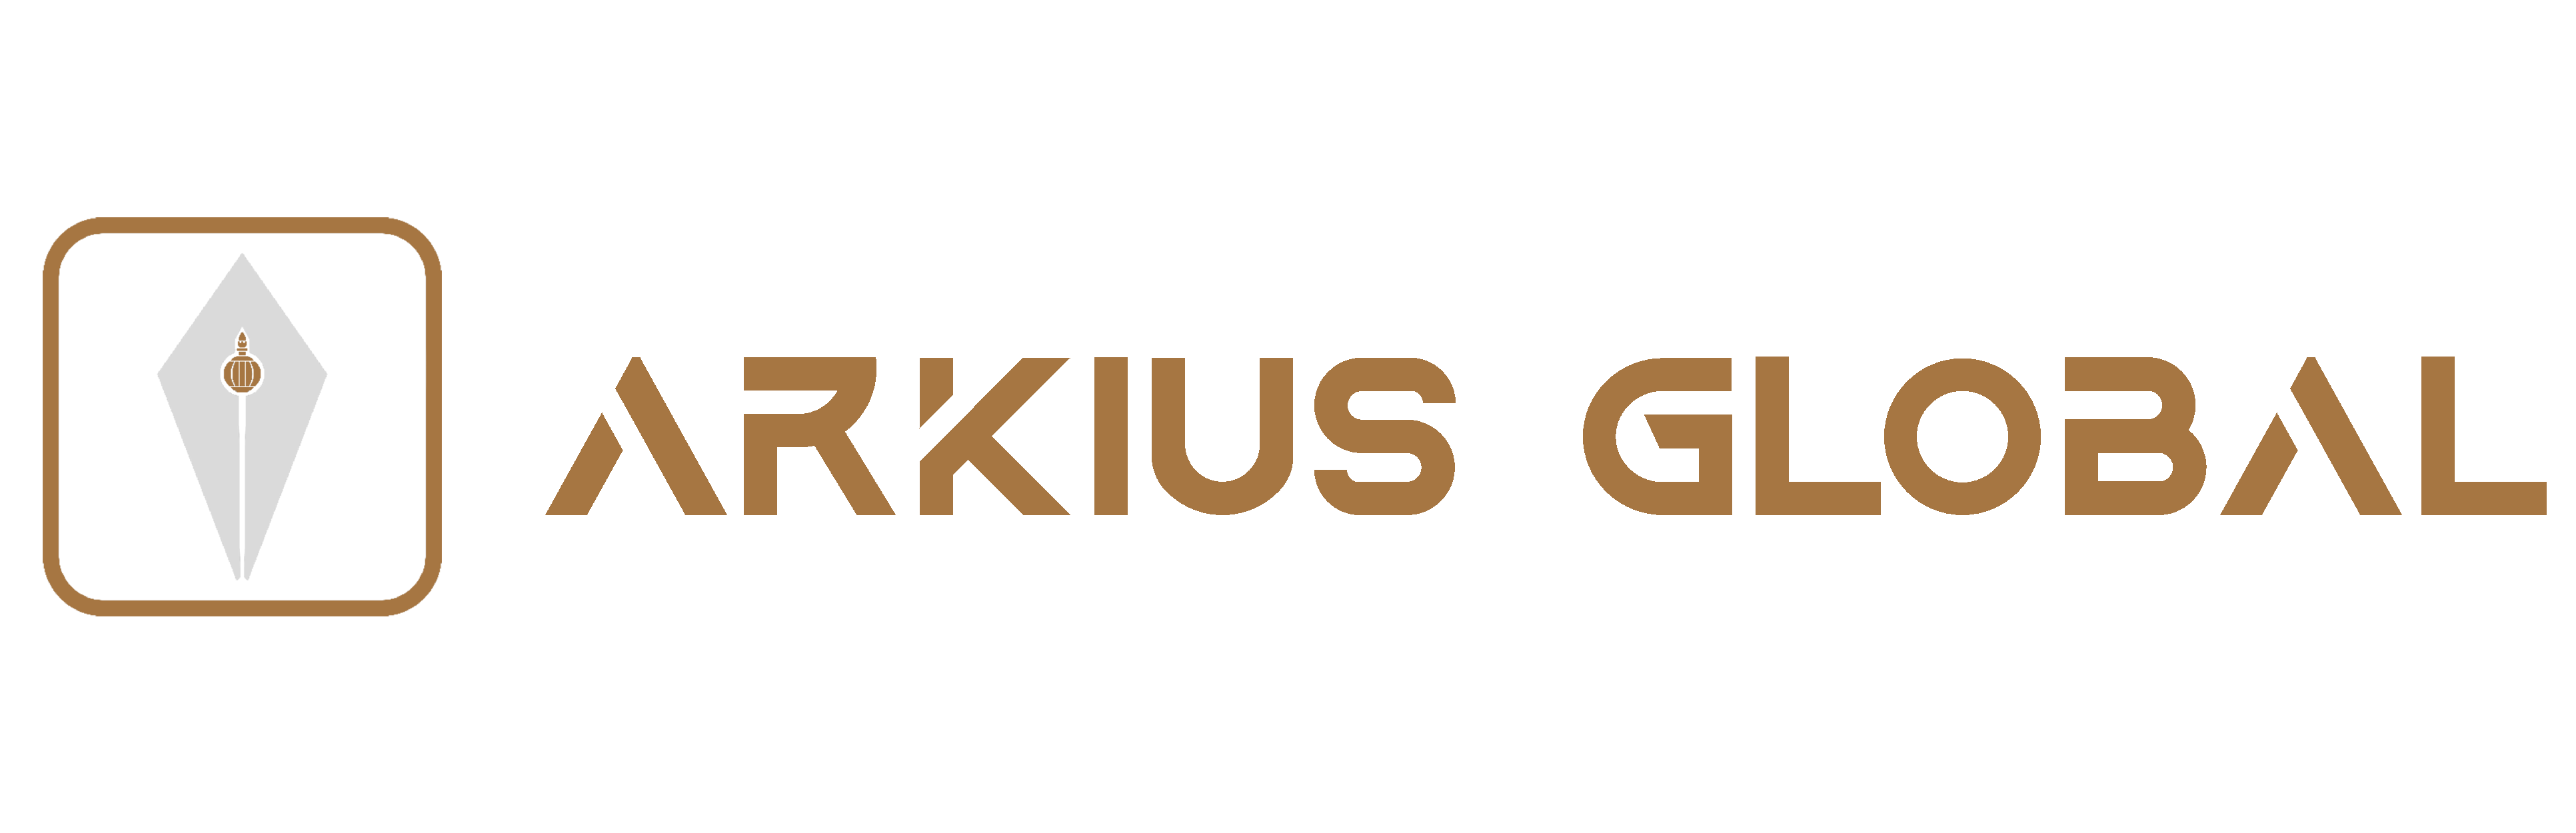 Arkius Global